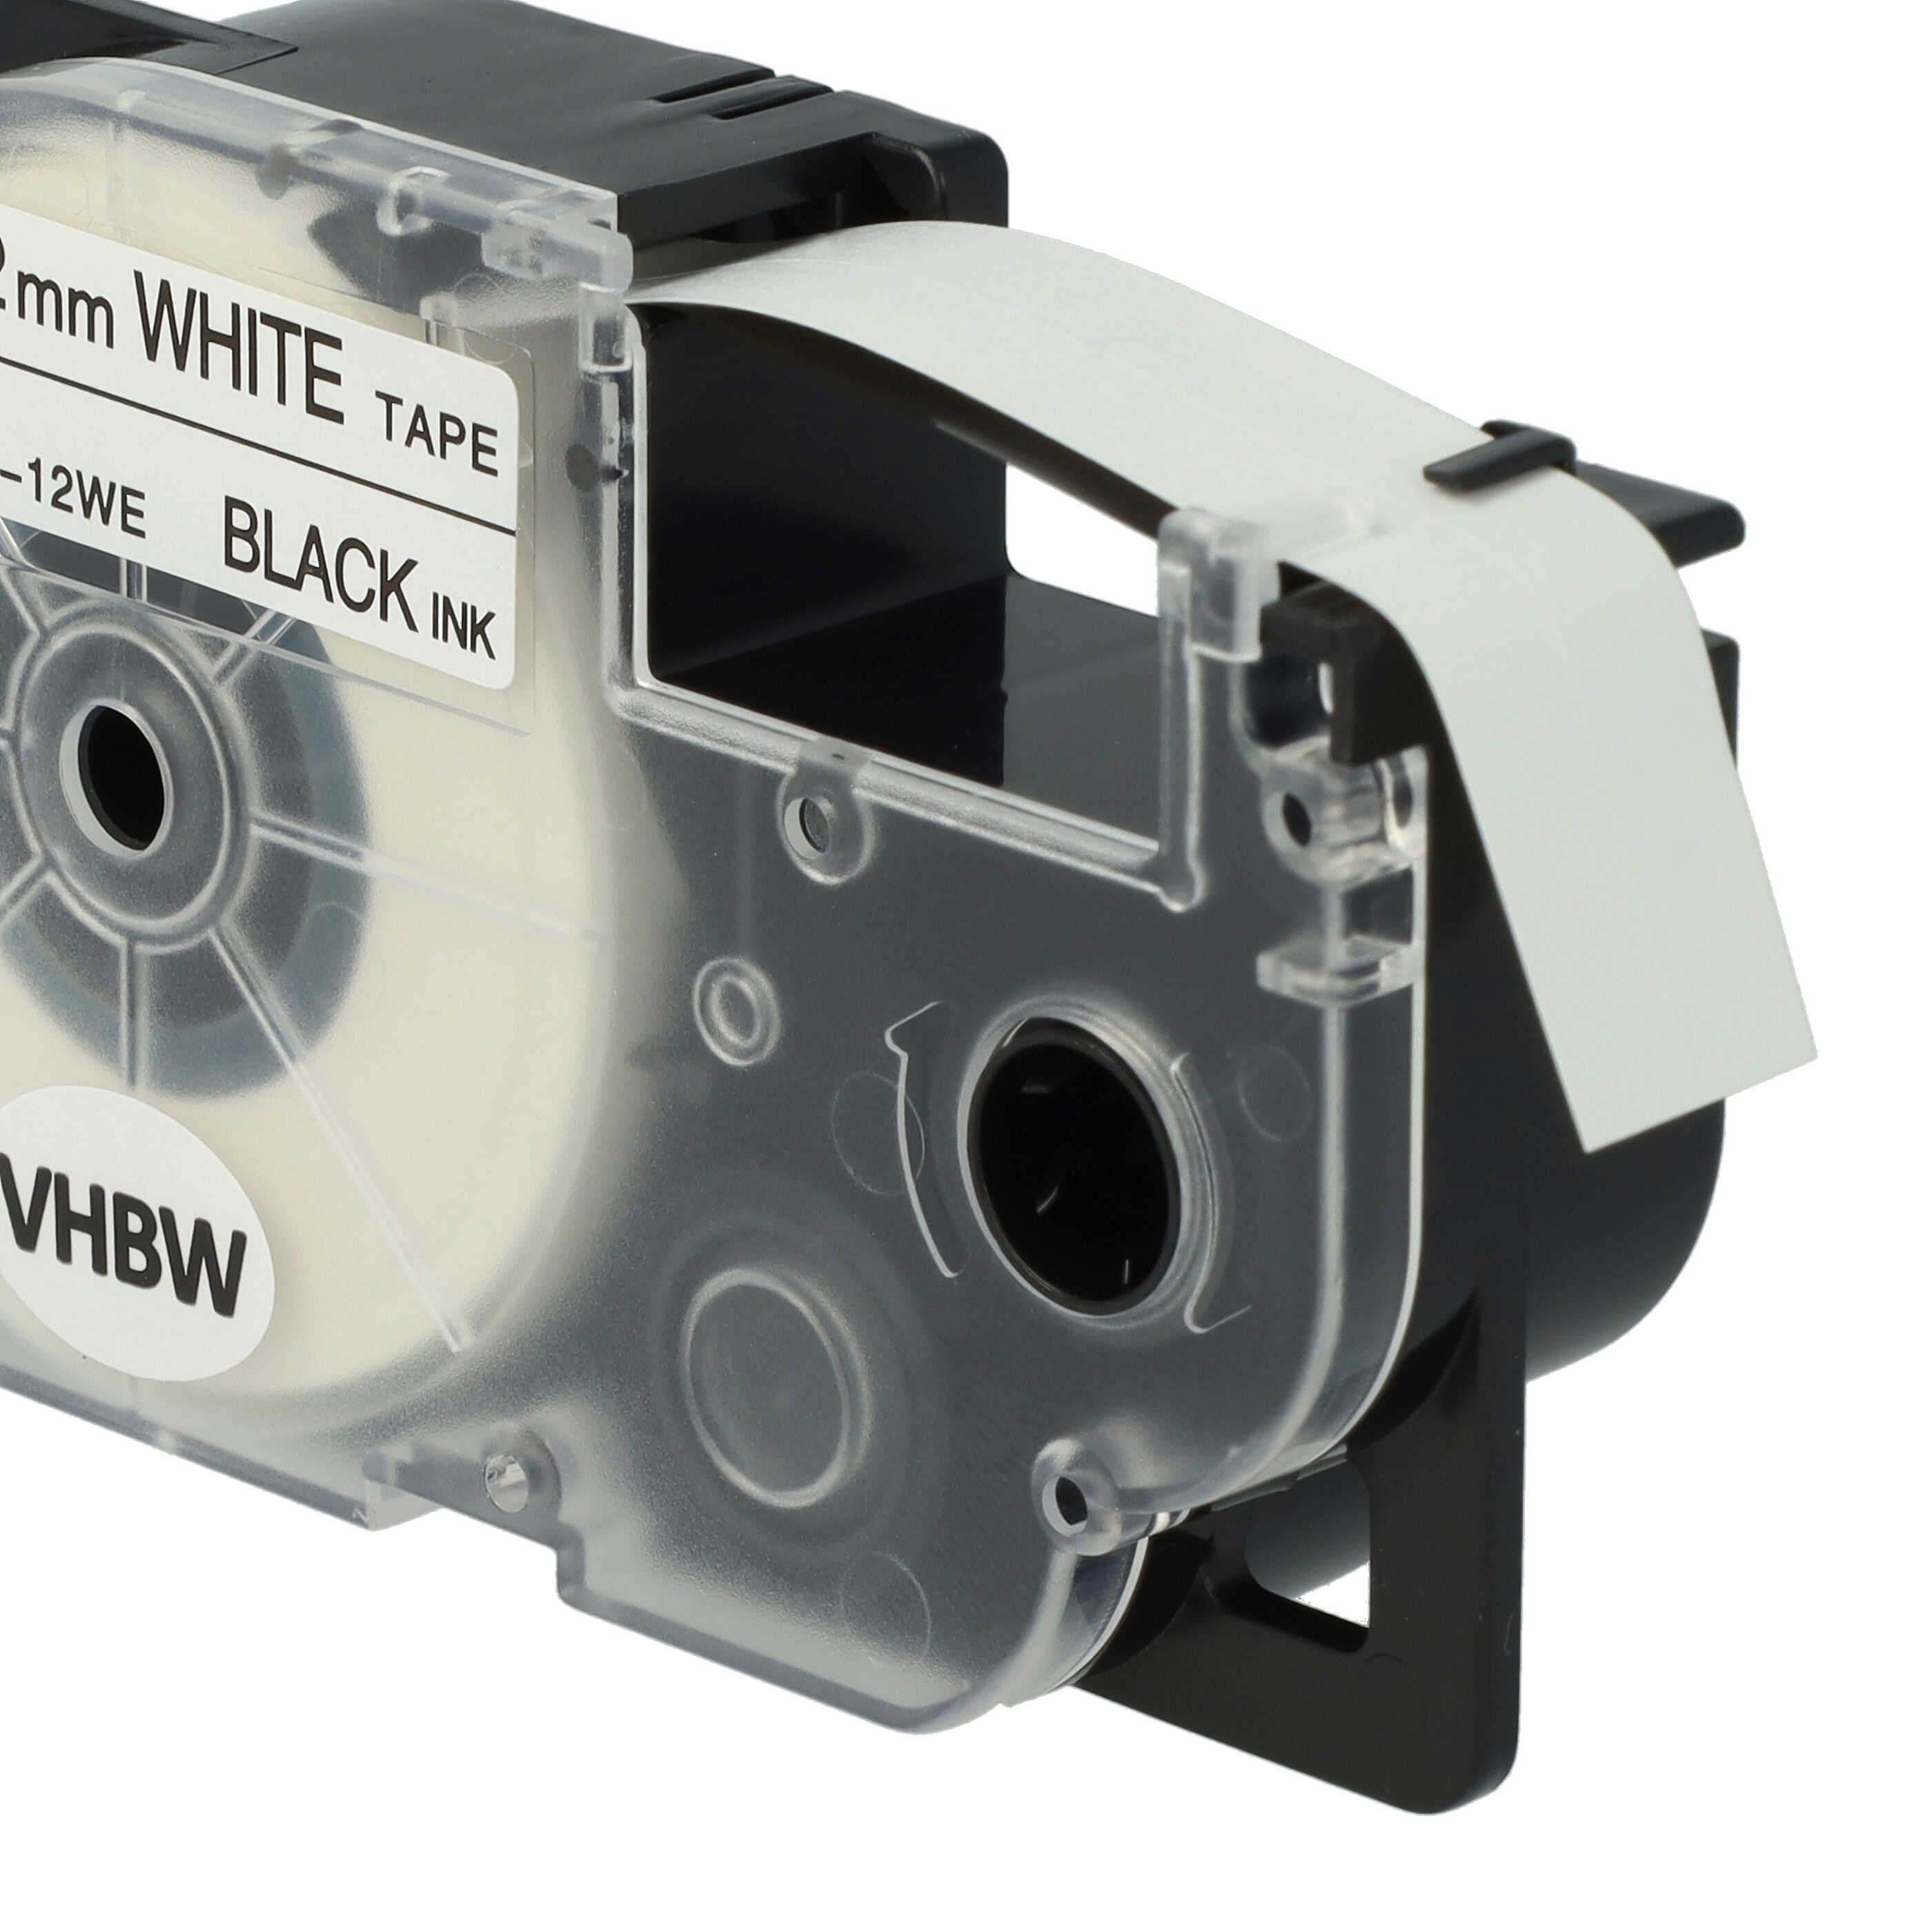 10x Cassetta nastro sostituisce Casio XR-12WE, XR-12WE1 per etichettatrice Casio 12mm nero su bianco